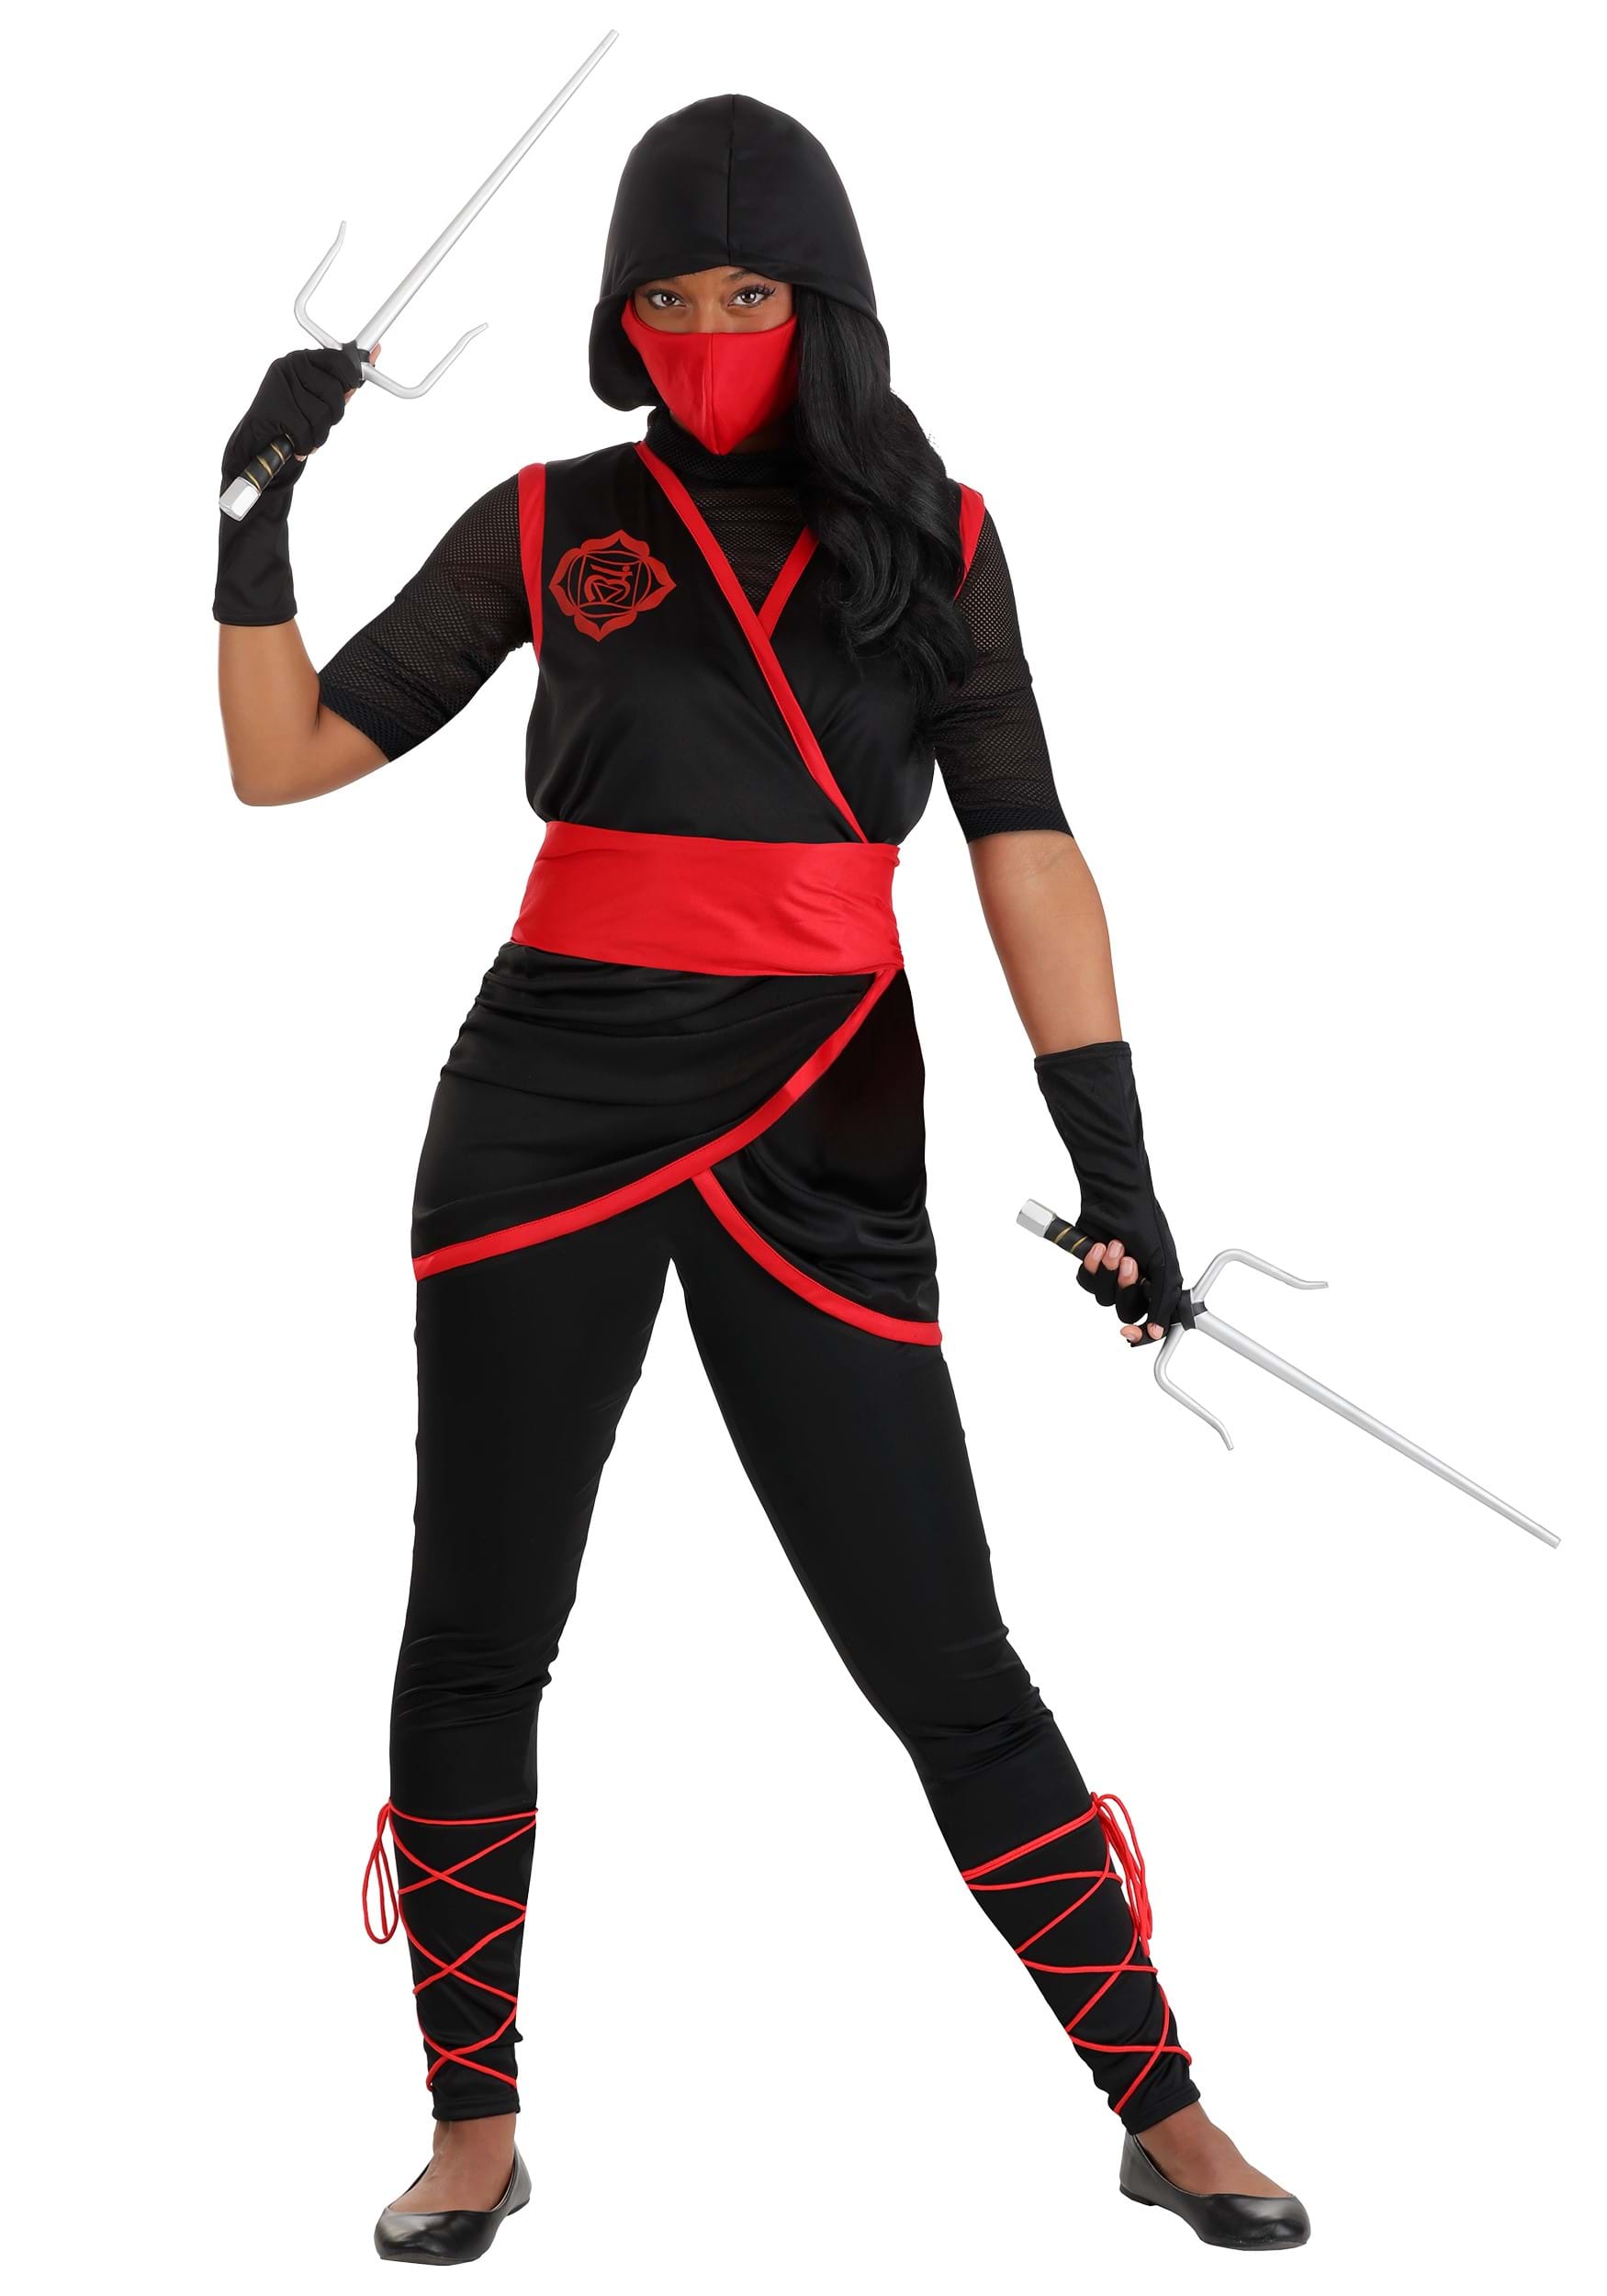  California Costumes Men's Stealth Ninja Costume, Black